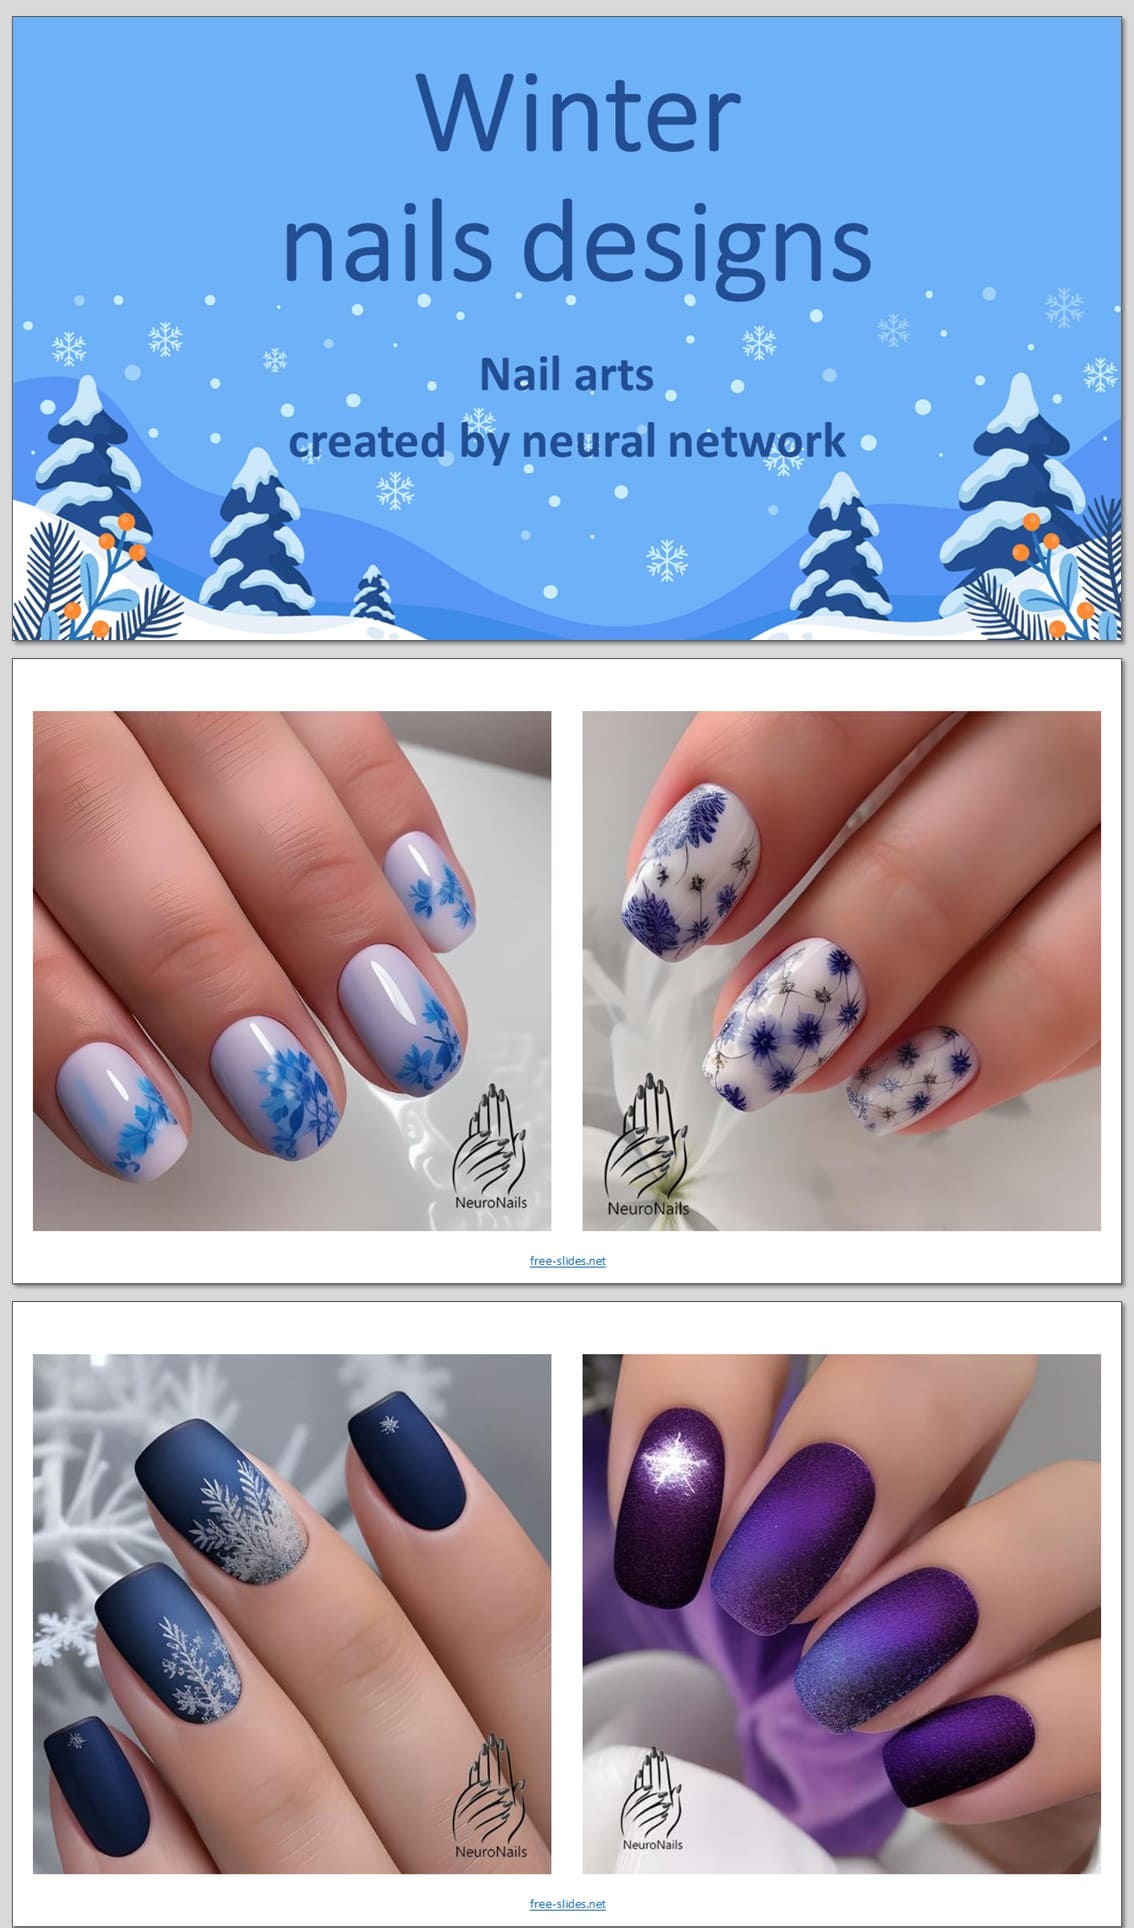 Neural network creates winter nail design